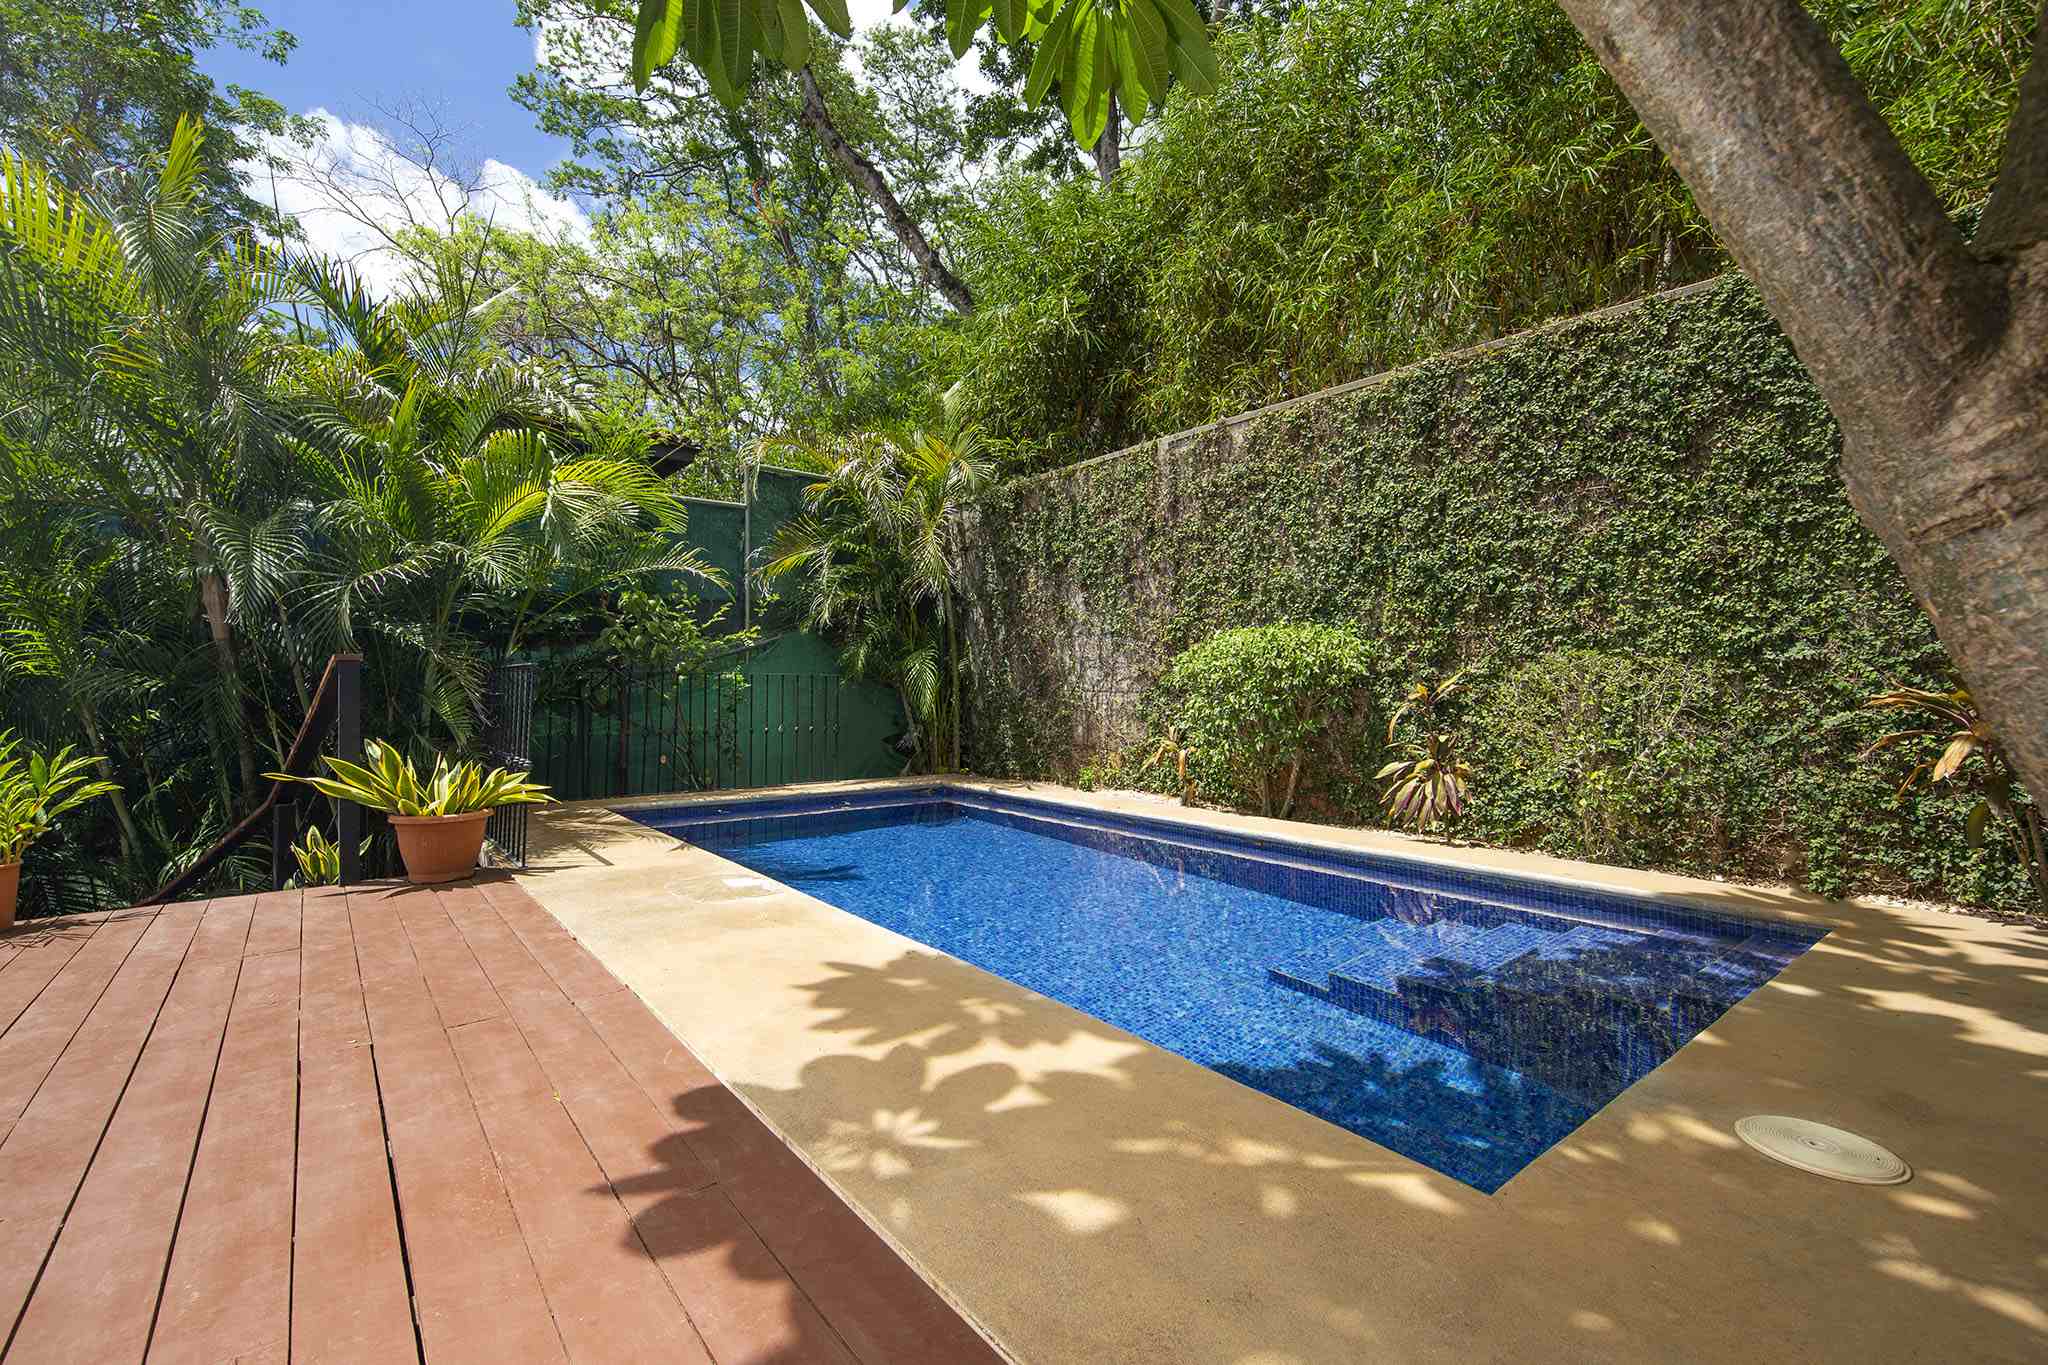 Casa Simon Costa Rica beach house for sale